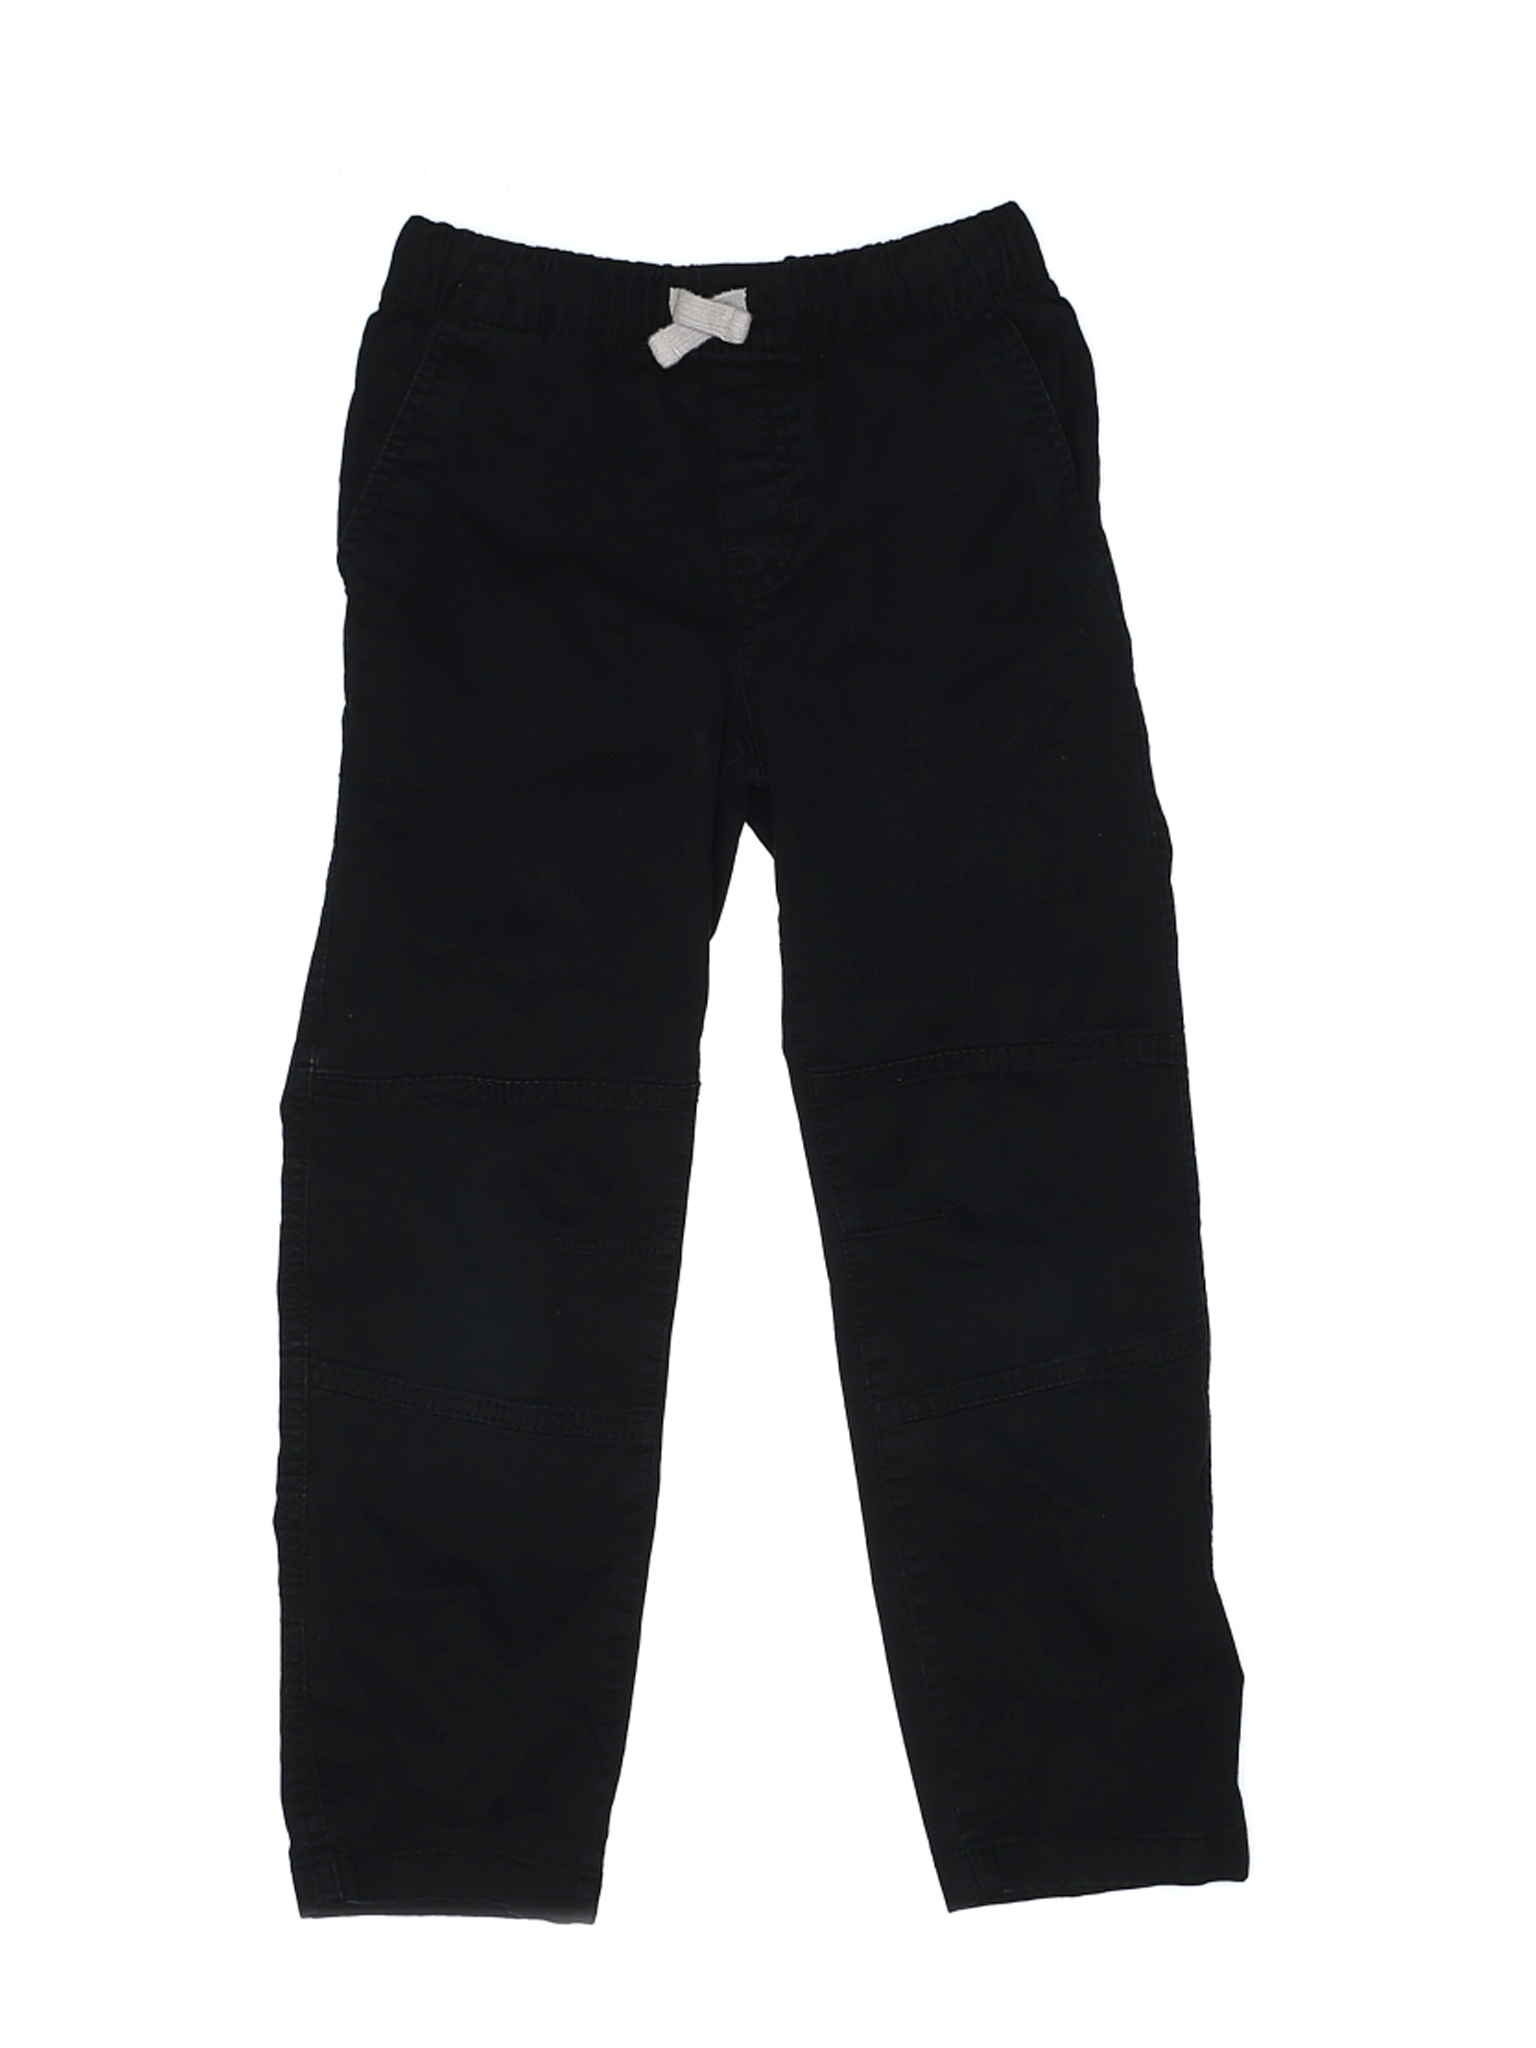 Cat & Jack Boys Black Casual Pants 7 | eBay